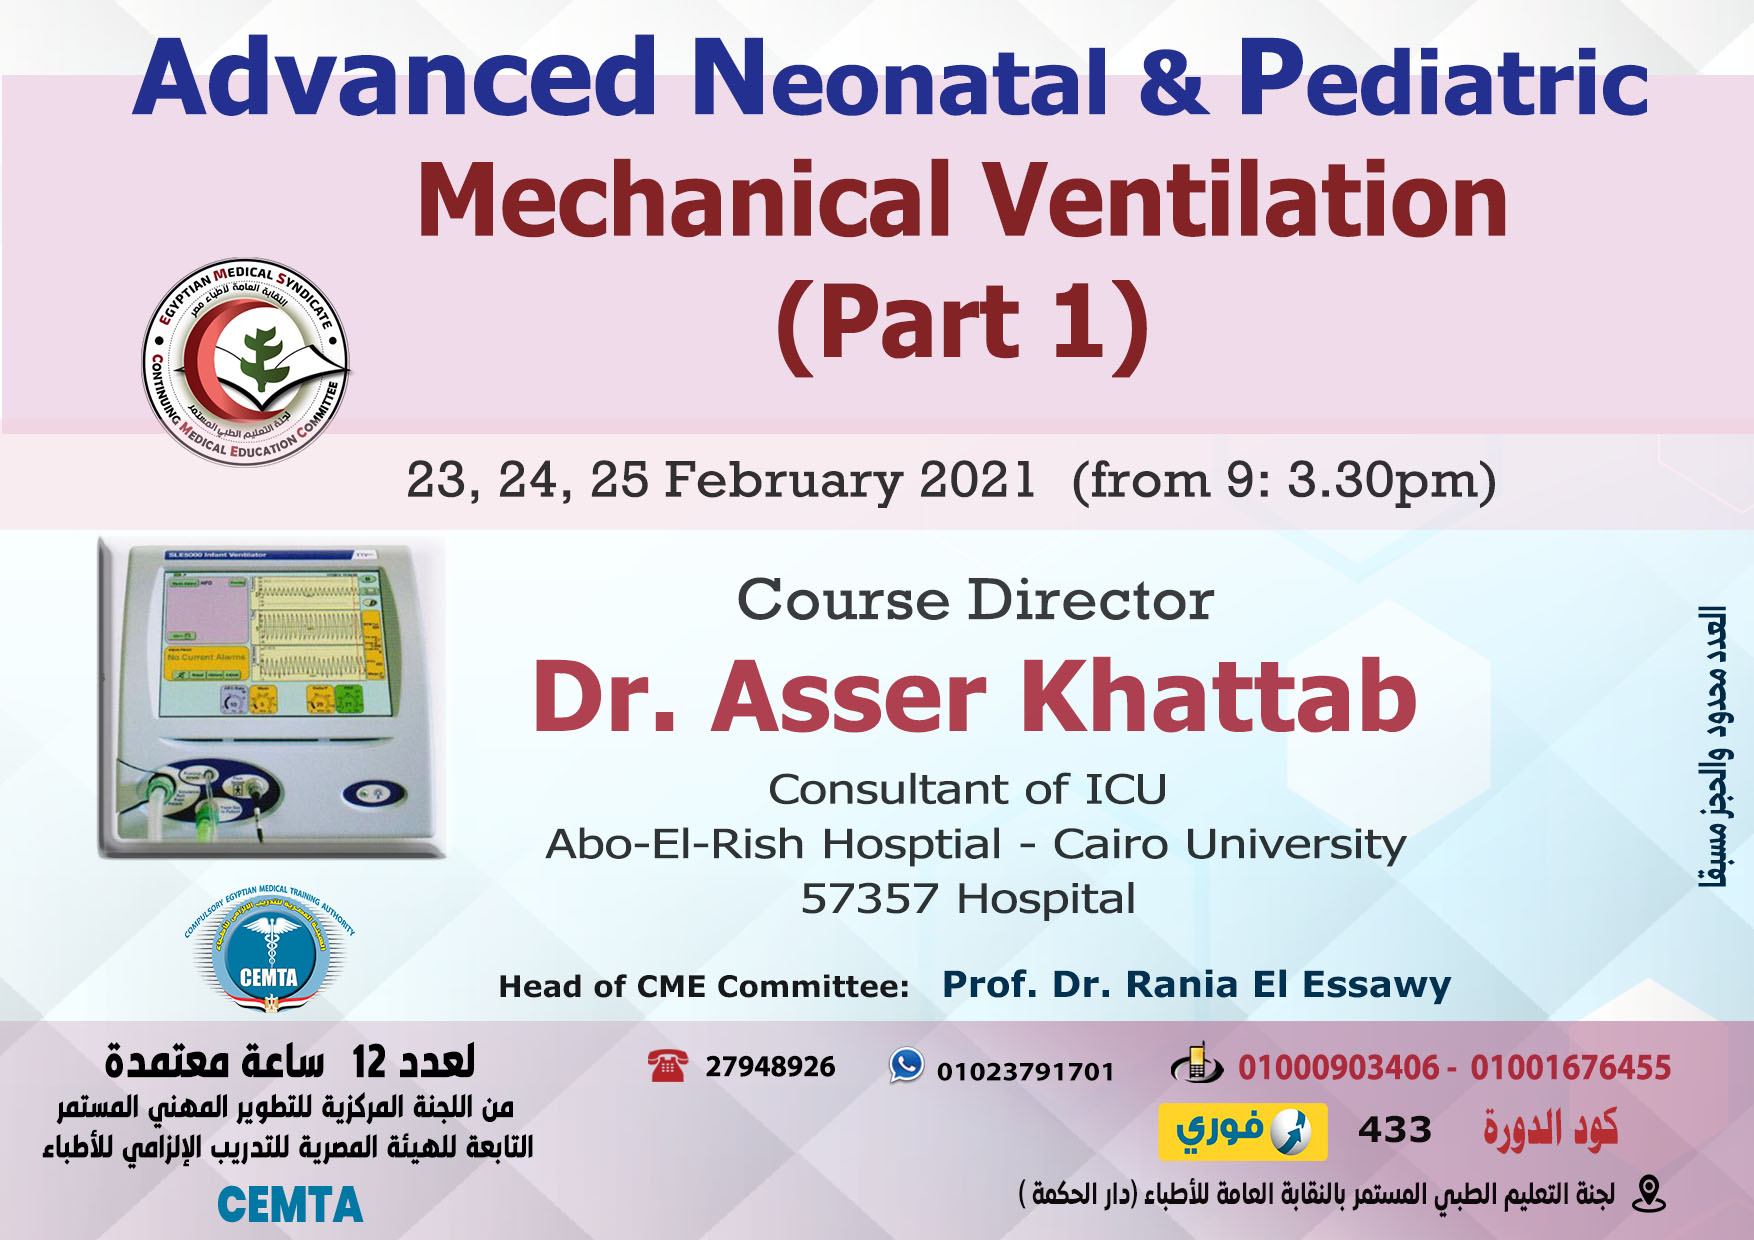 Advanced Neonatal & Pediatric Mechanical Ventilation (Part 1)